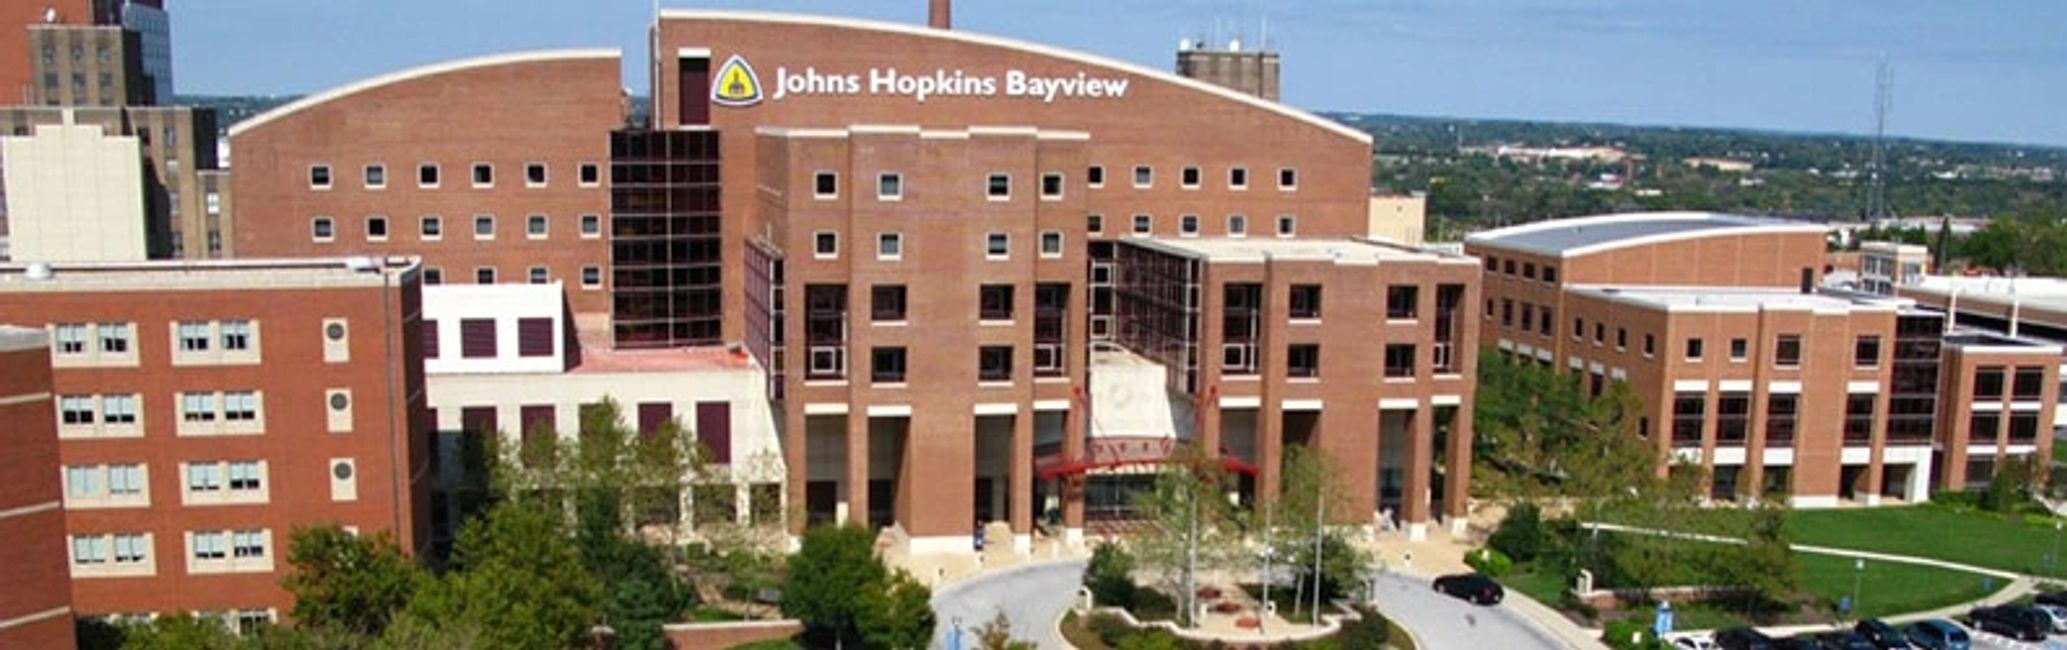 Johns Hopkins Bayview Medical Campus